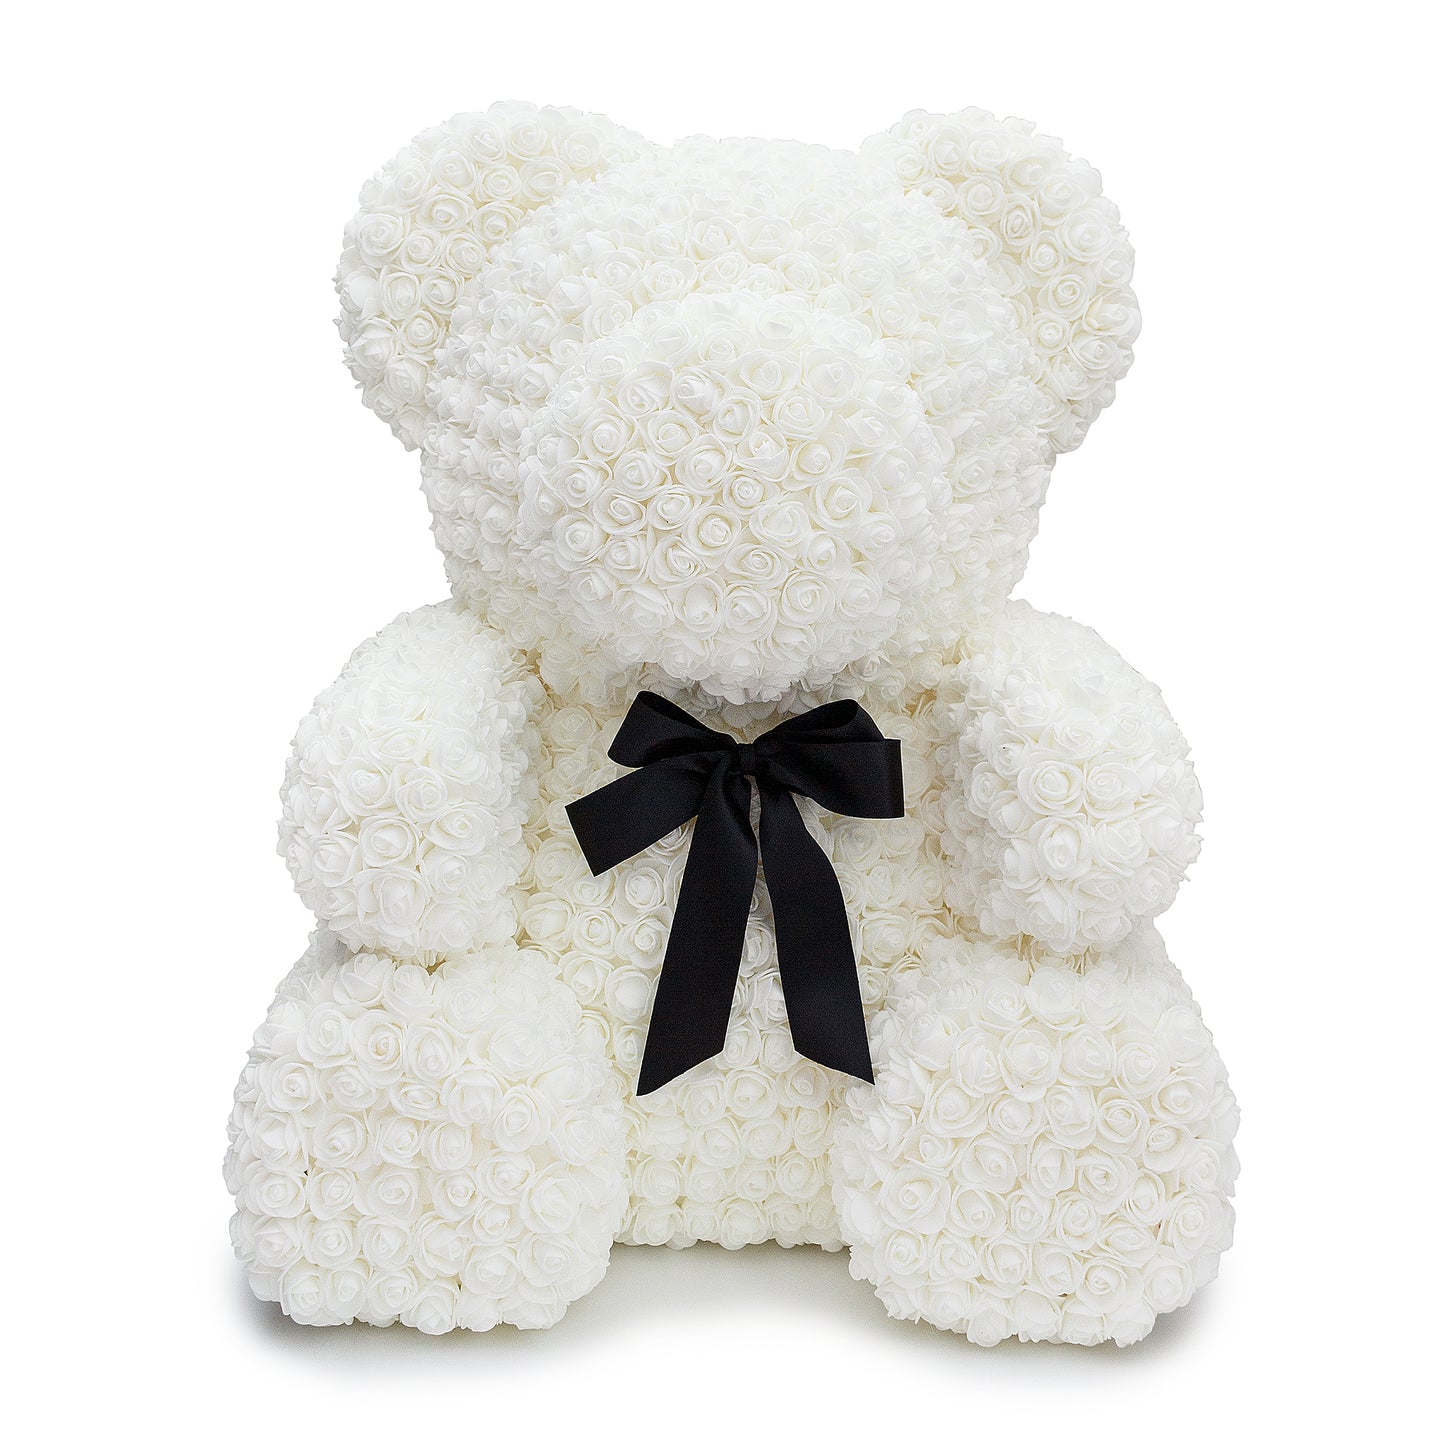 BIG White Luxury Handmade Rose Teddy Bear -1